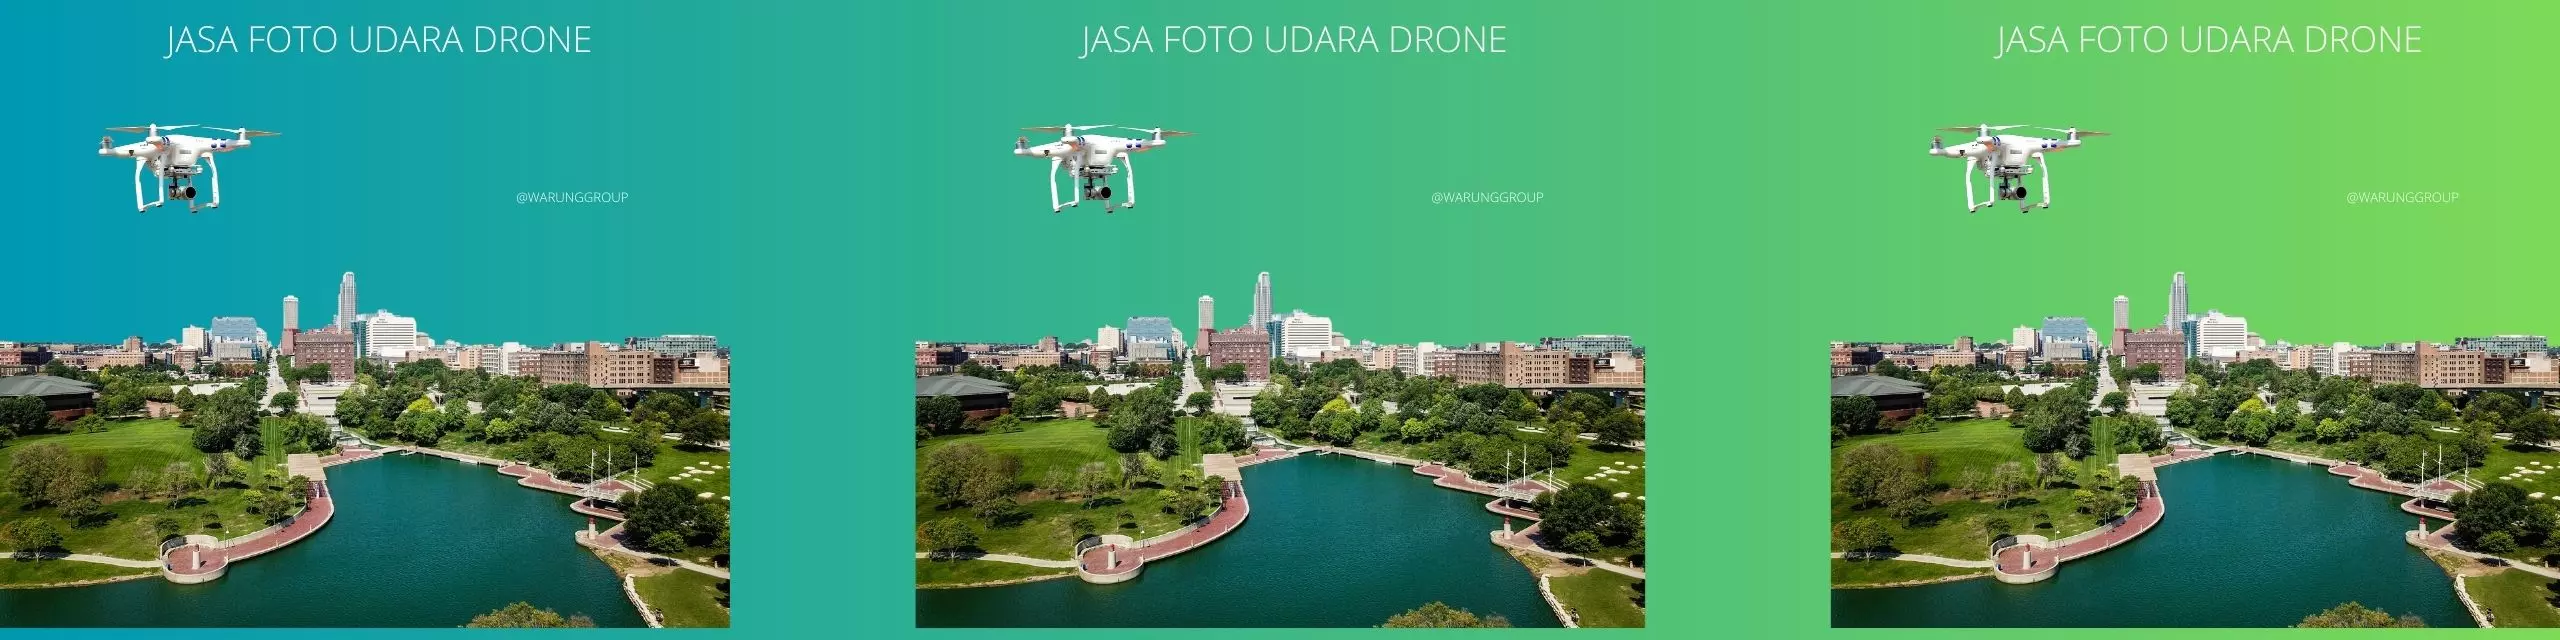 Jasa Foto Udara Drone